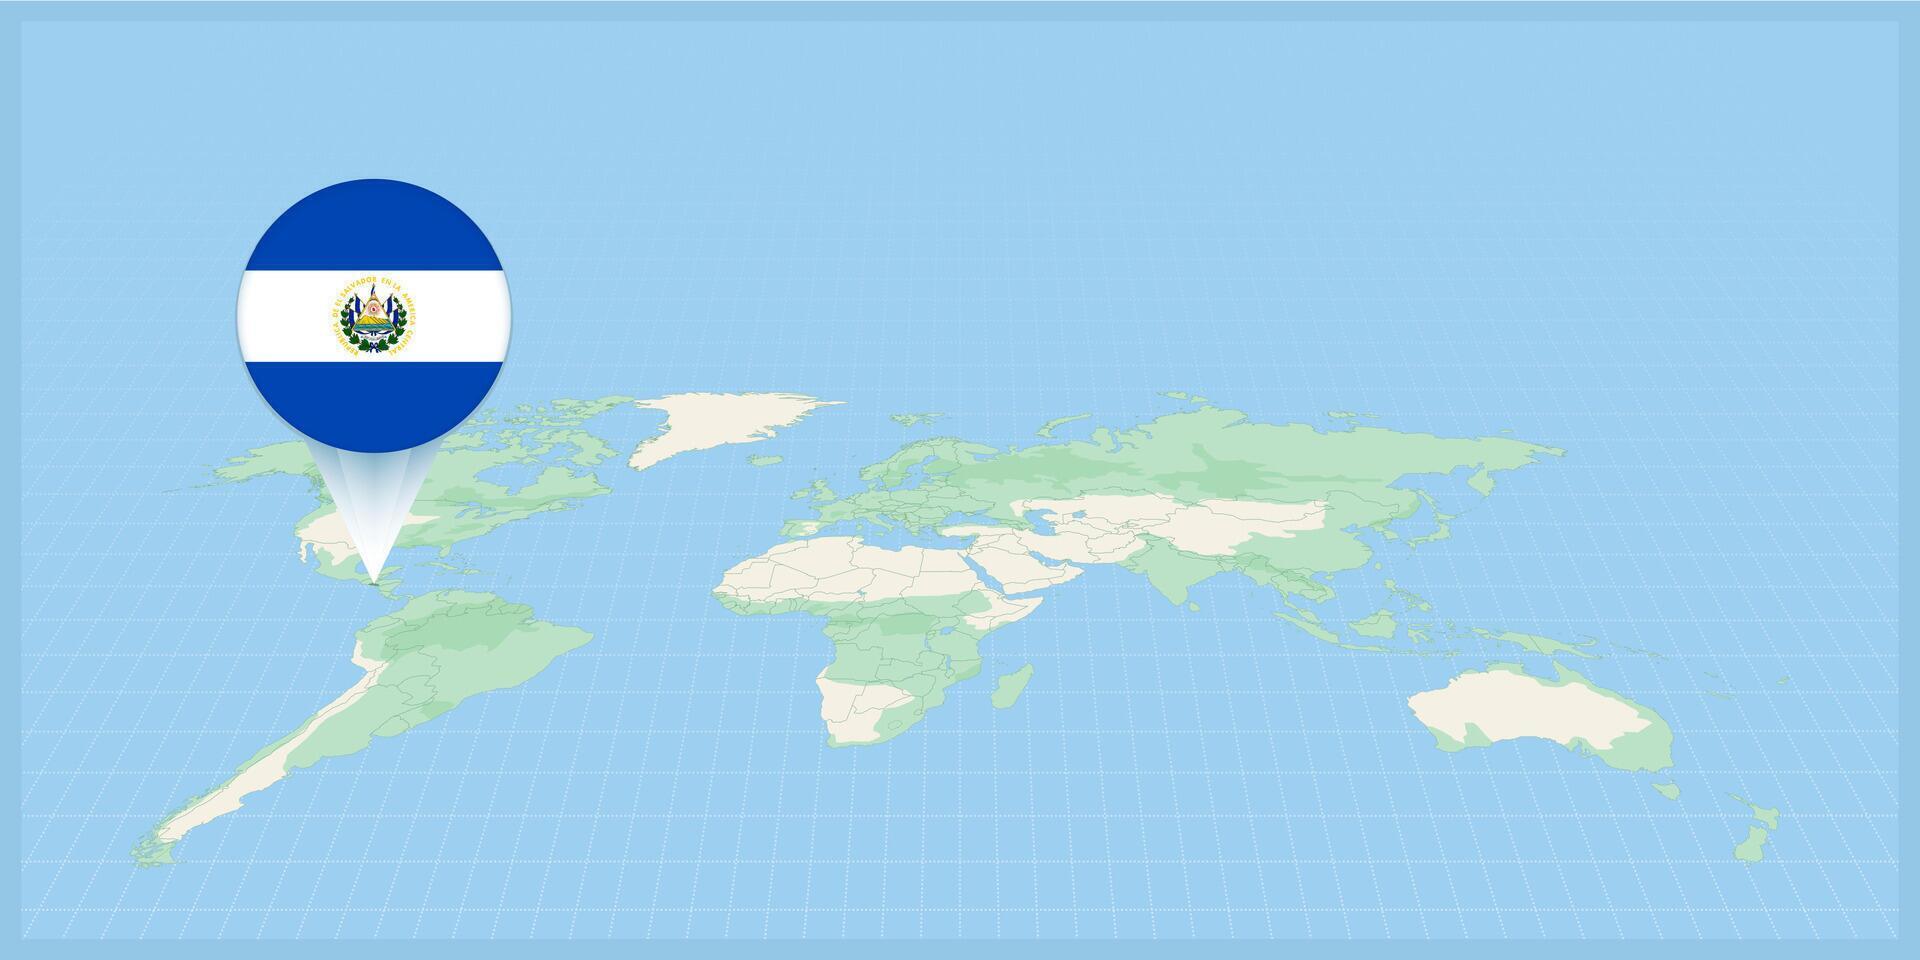 emplacement de el Salvador sur le monde carte, marqué avec el Salvador drapeau broche. vecteur